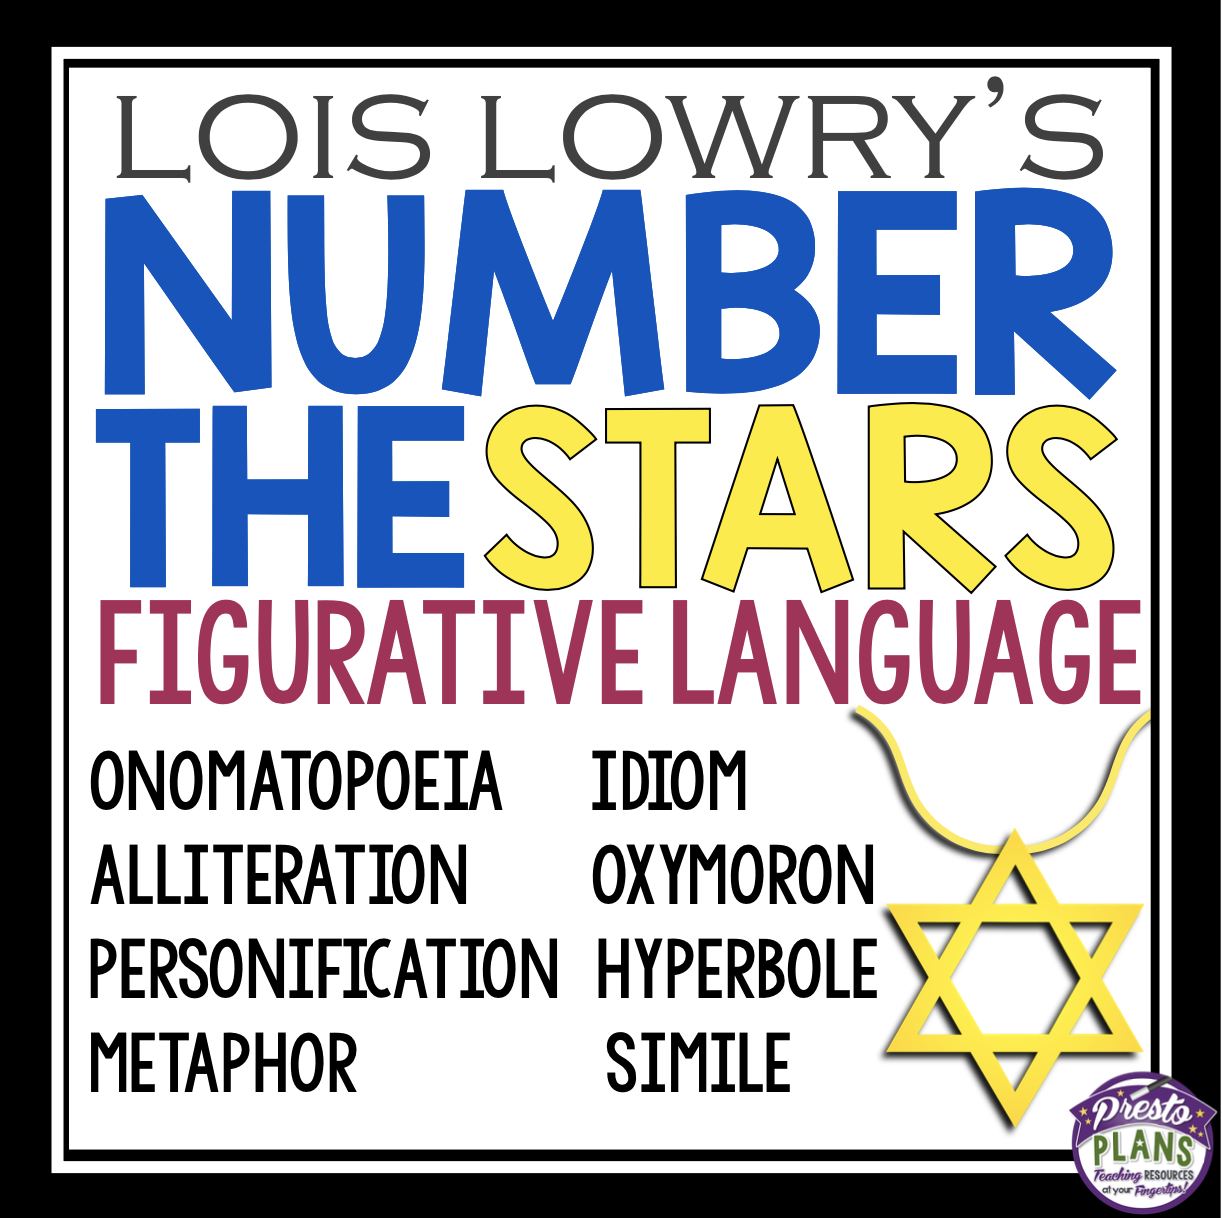 number-the-stars-figurative-language-prestoplanners